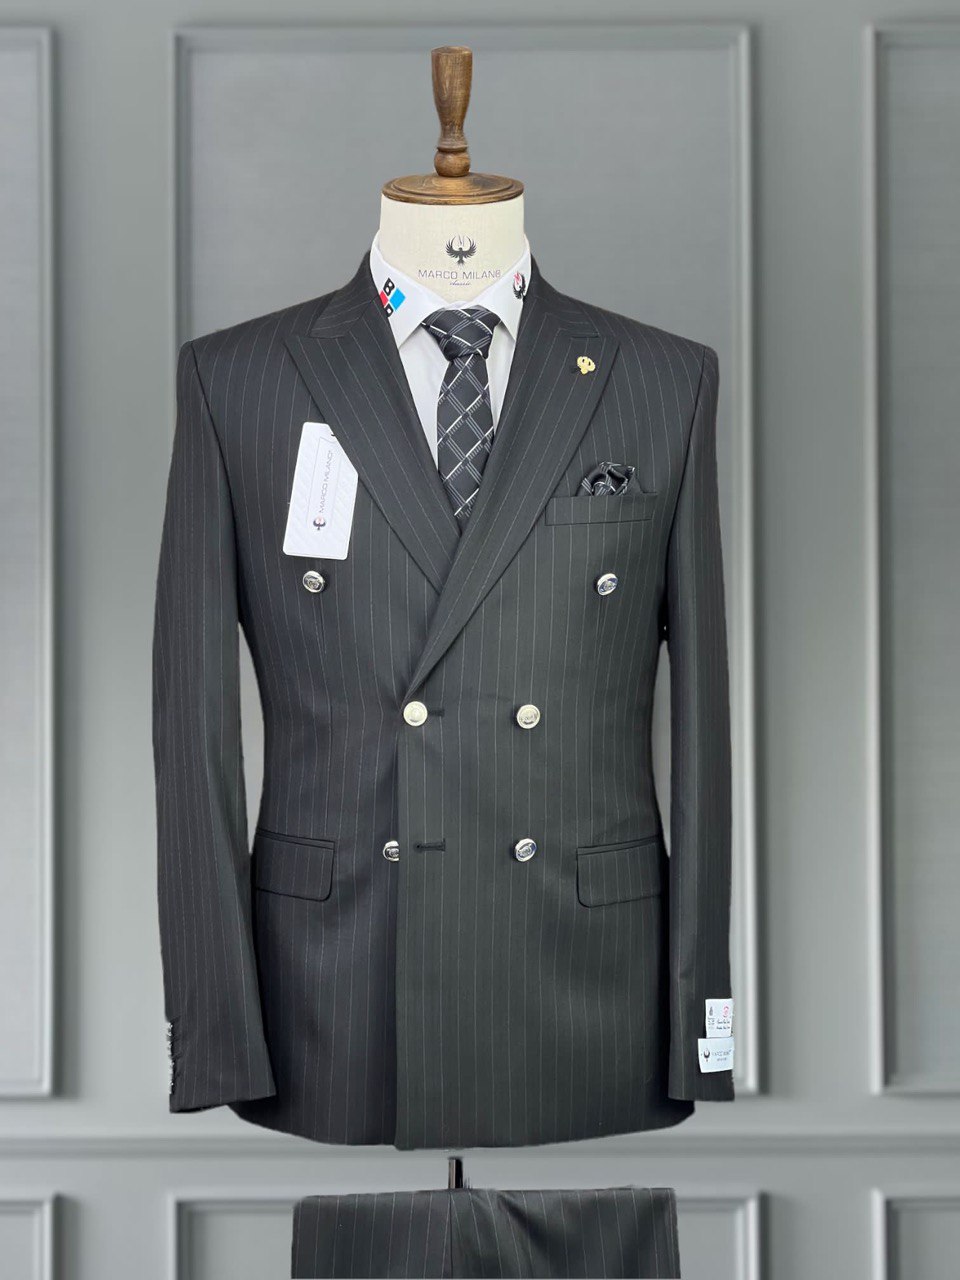 Marco Milano Mens Suit